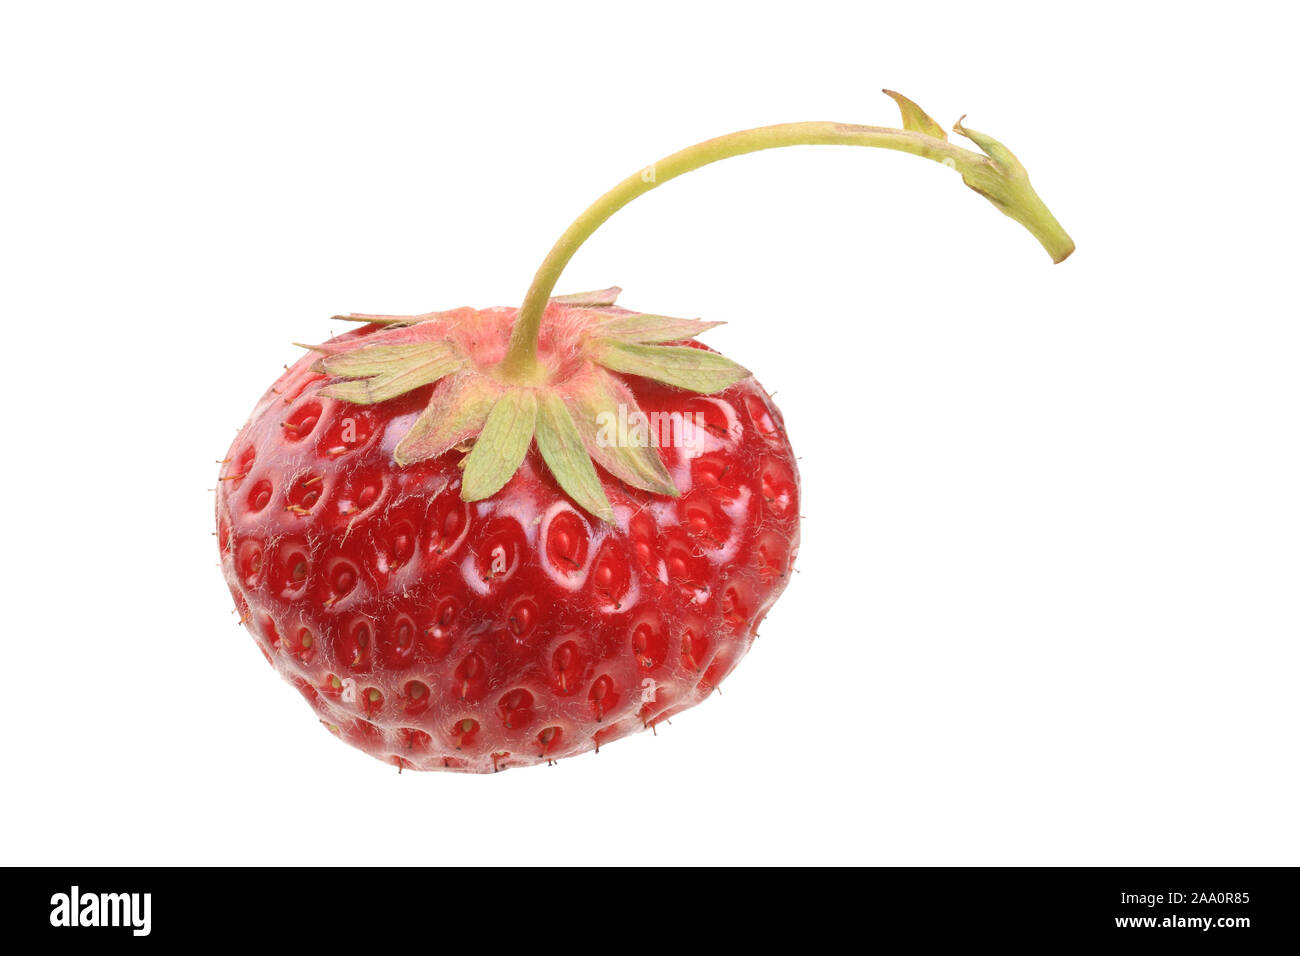 Erdbeere der Sorte 'Clairi'. Stock Photo